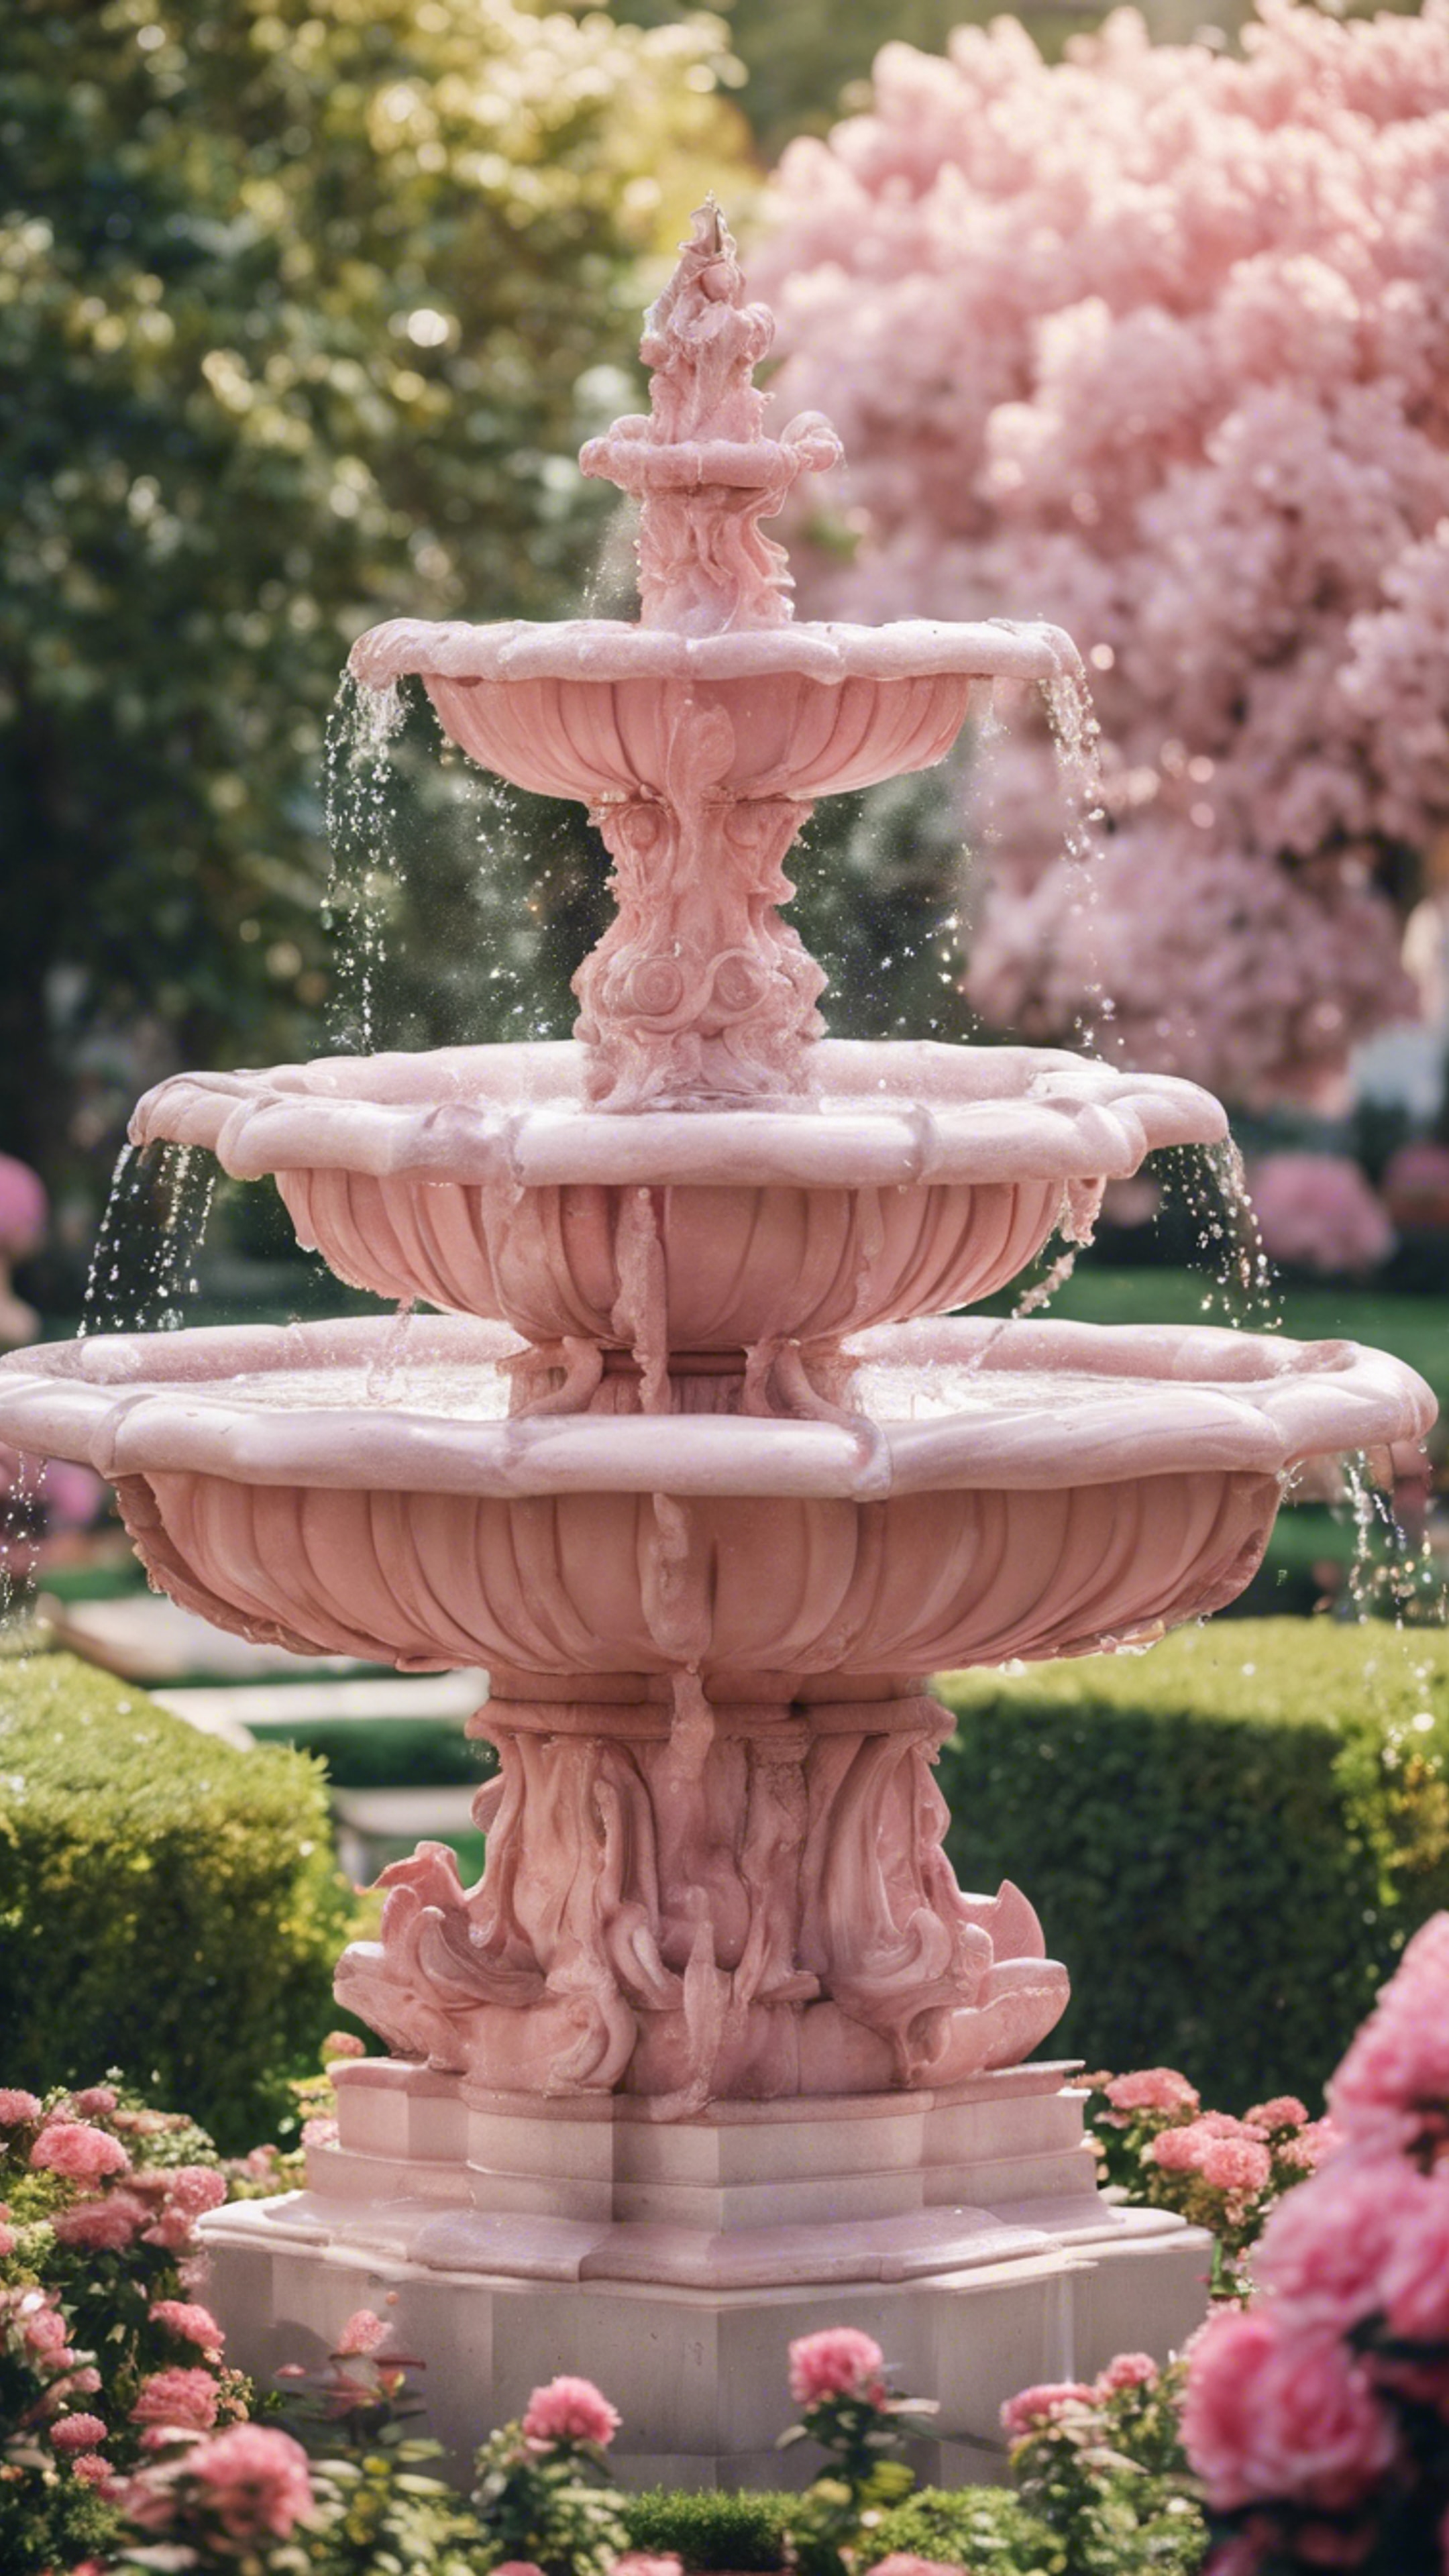 A fountain made of pink marble in an elegant flower garden.壁紙[73b566b49d564d04a87c]